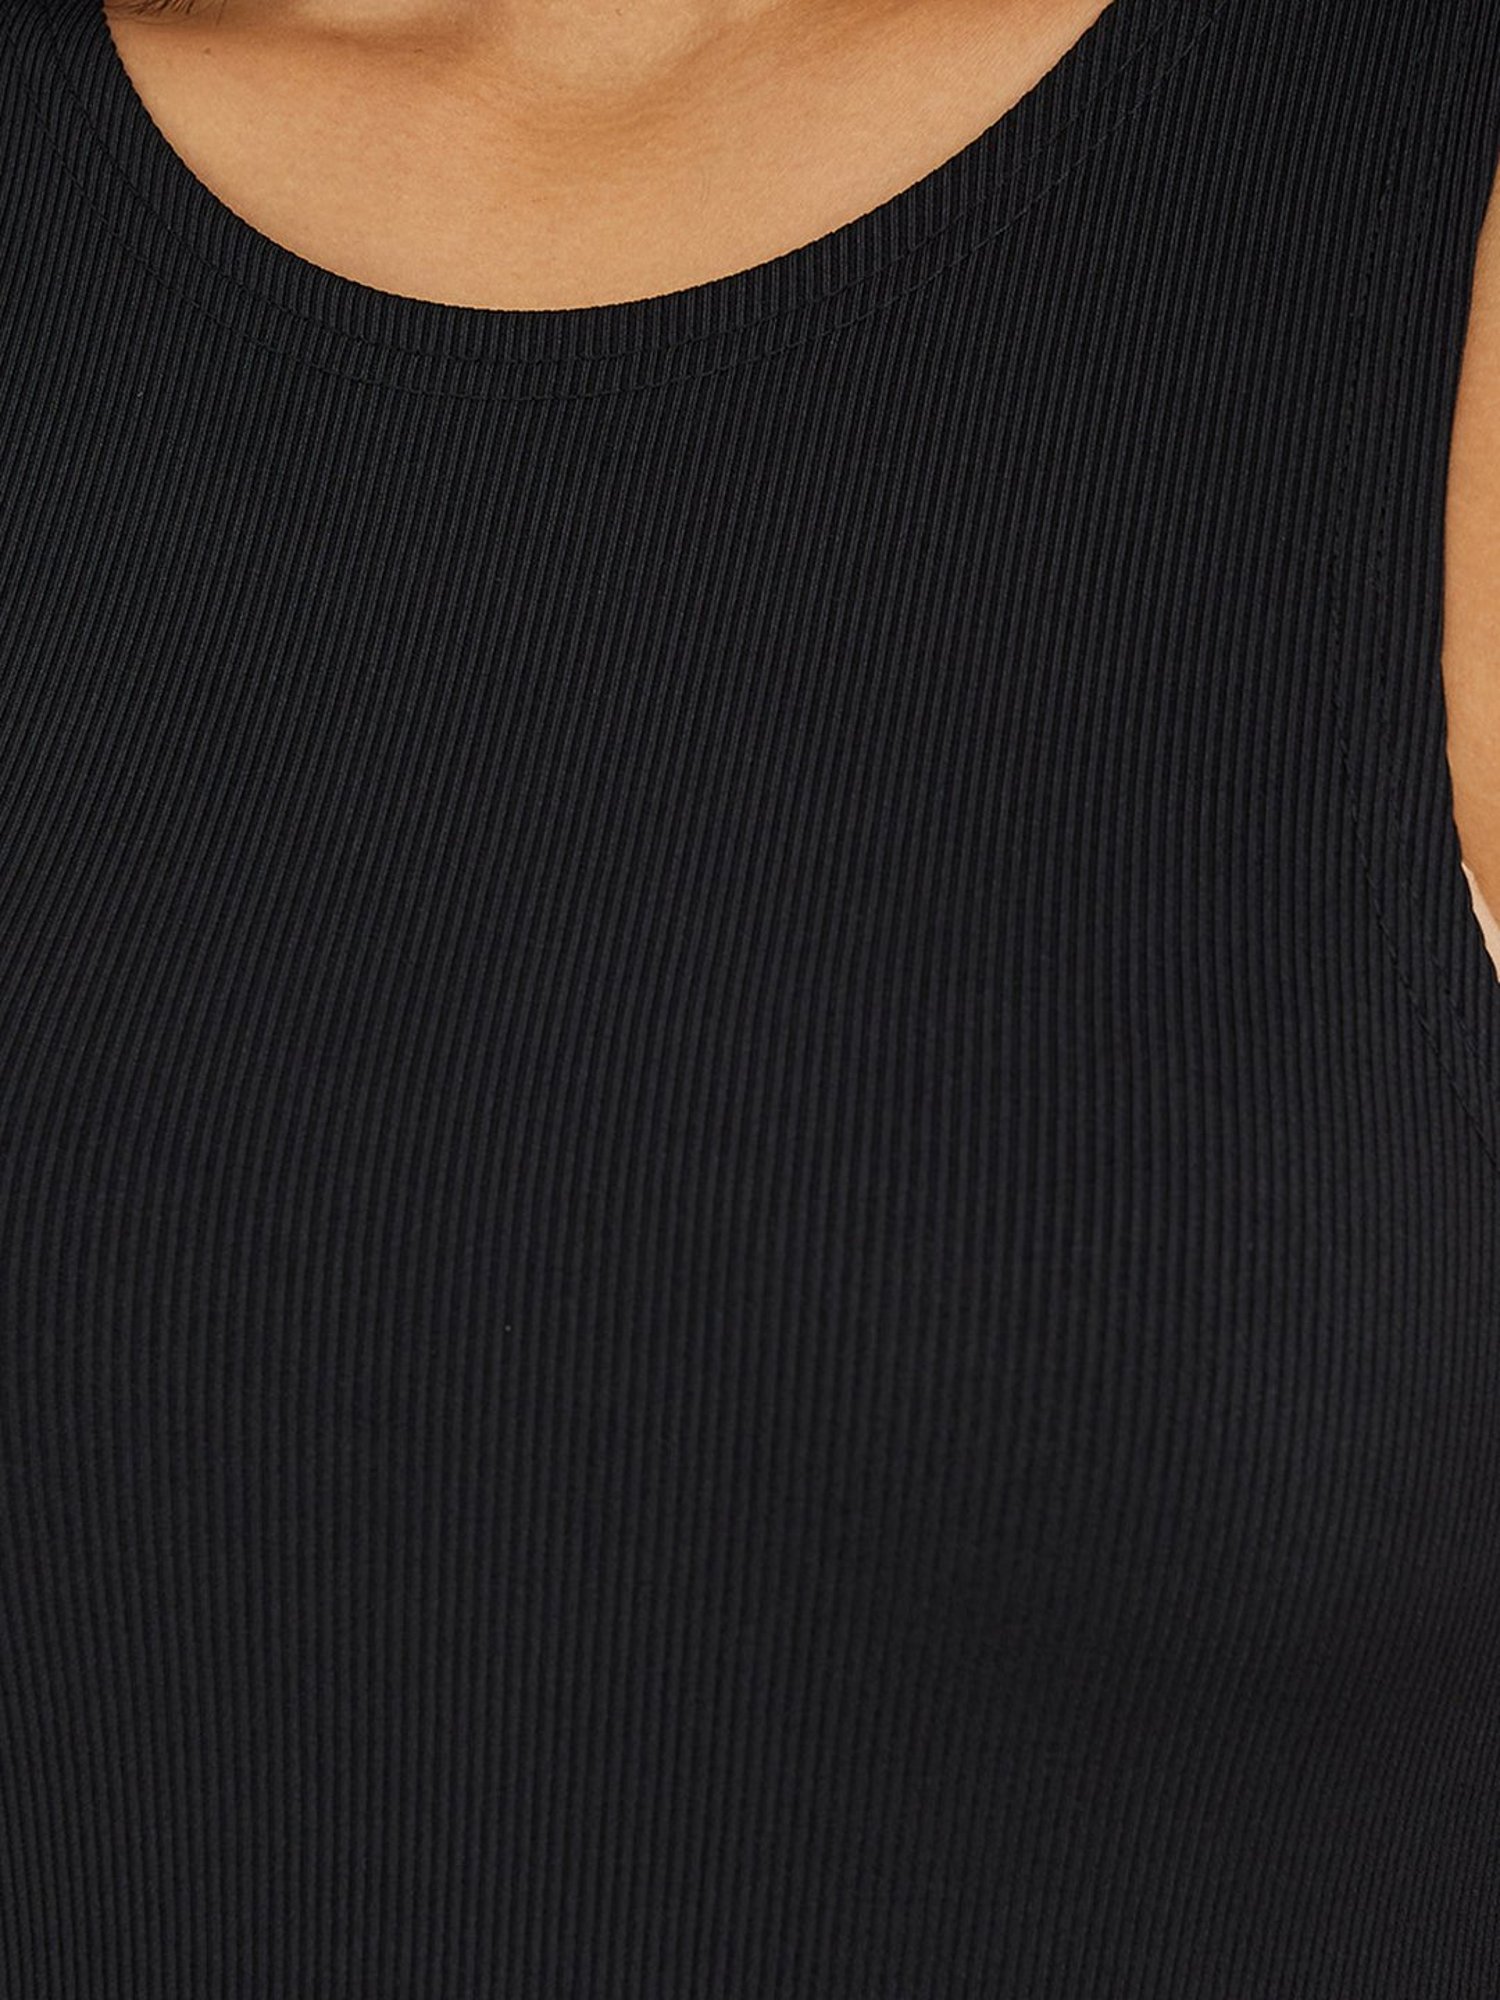 Buy RIB-KNIT ROUND NECK BLACK BODYSUIT for Women Online in India